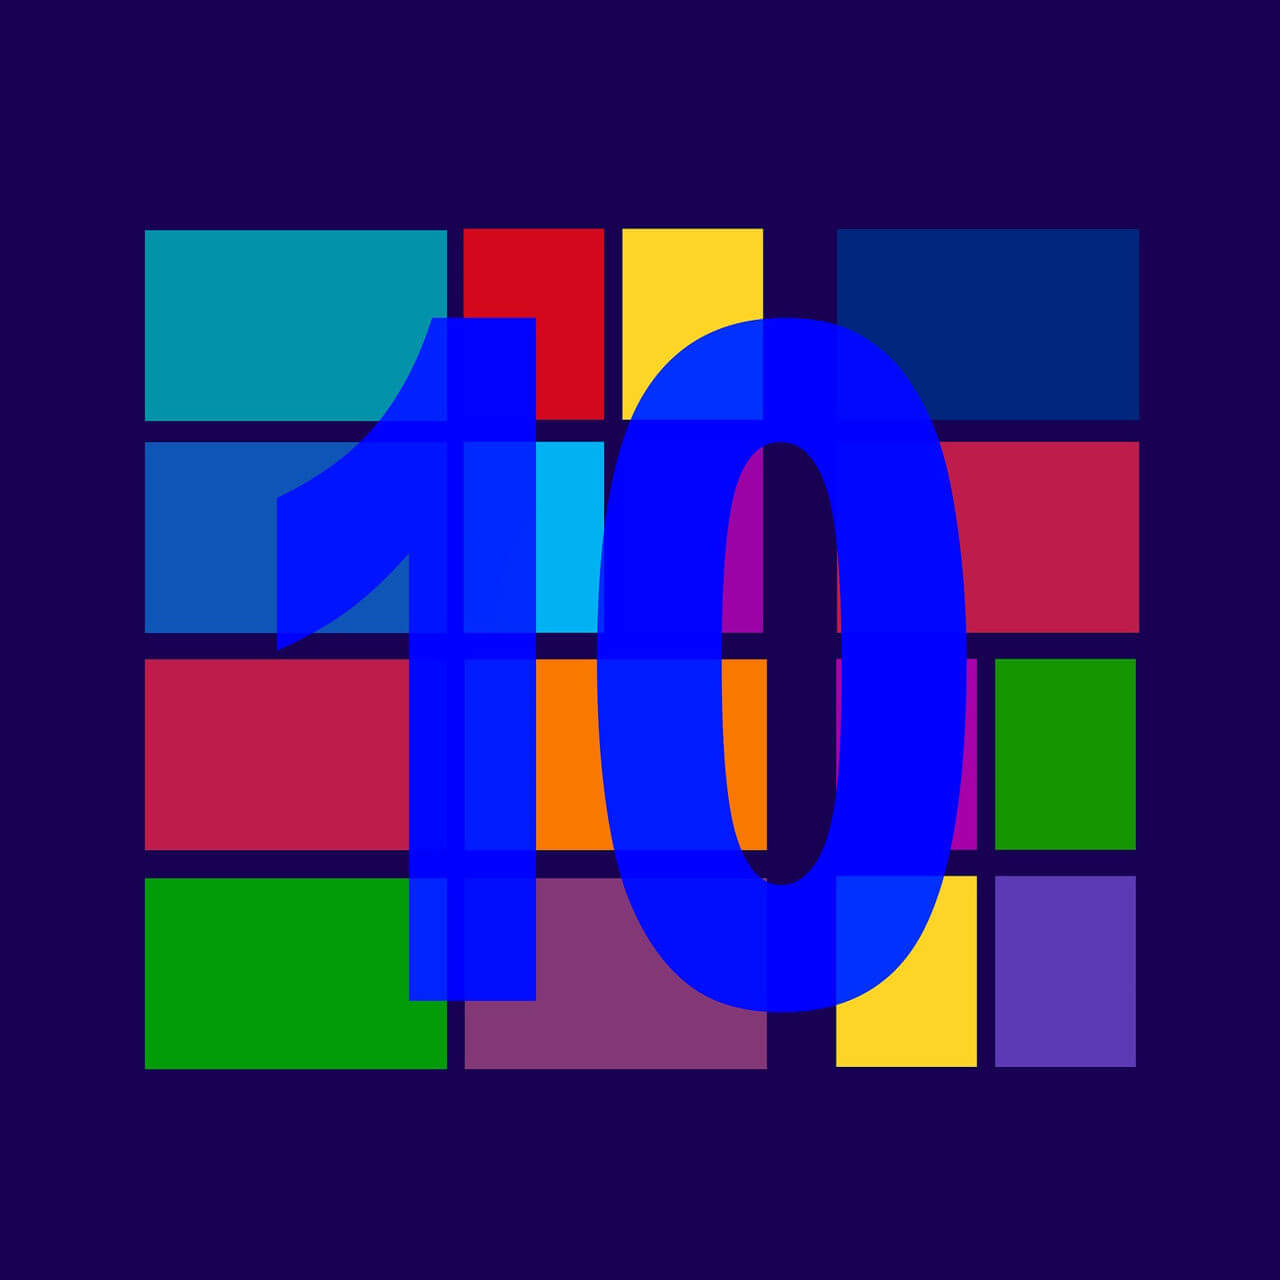 Windows 10 20H1 build 18875